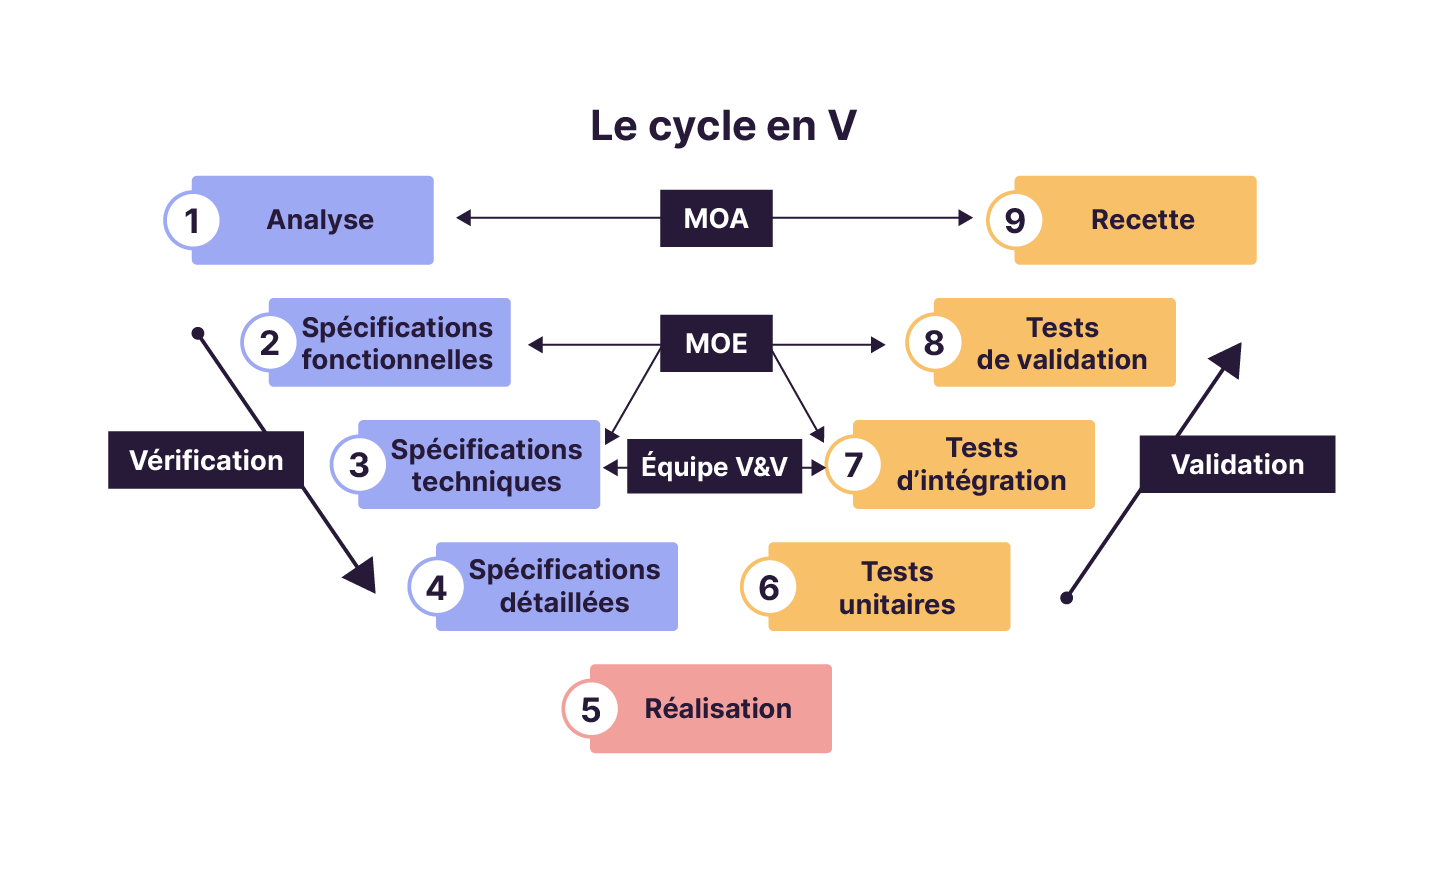 Les acteurs du cycle en V sont composés de la MOA, la MOE et l'équipe V&V